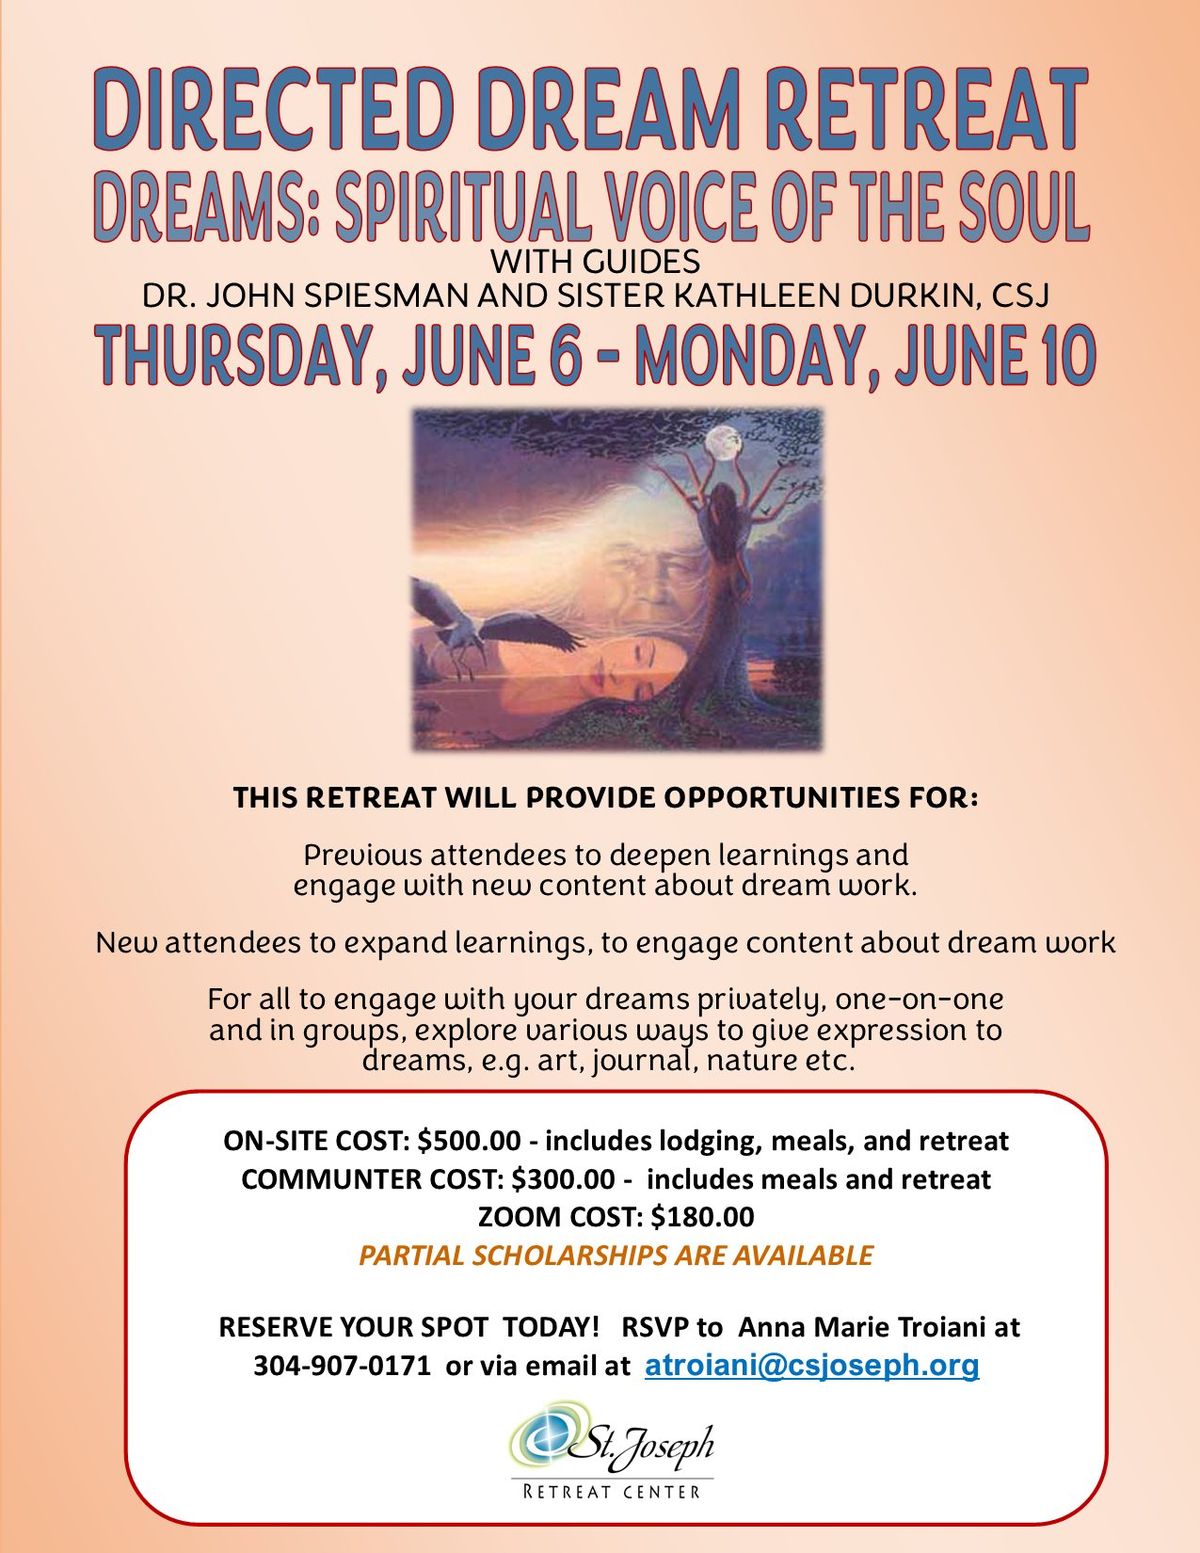 Dreams: Spiritual Voice of the Soul